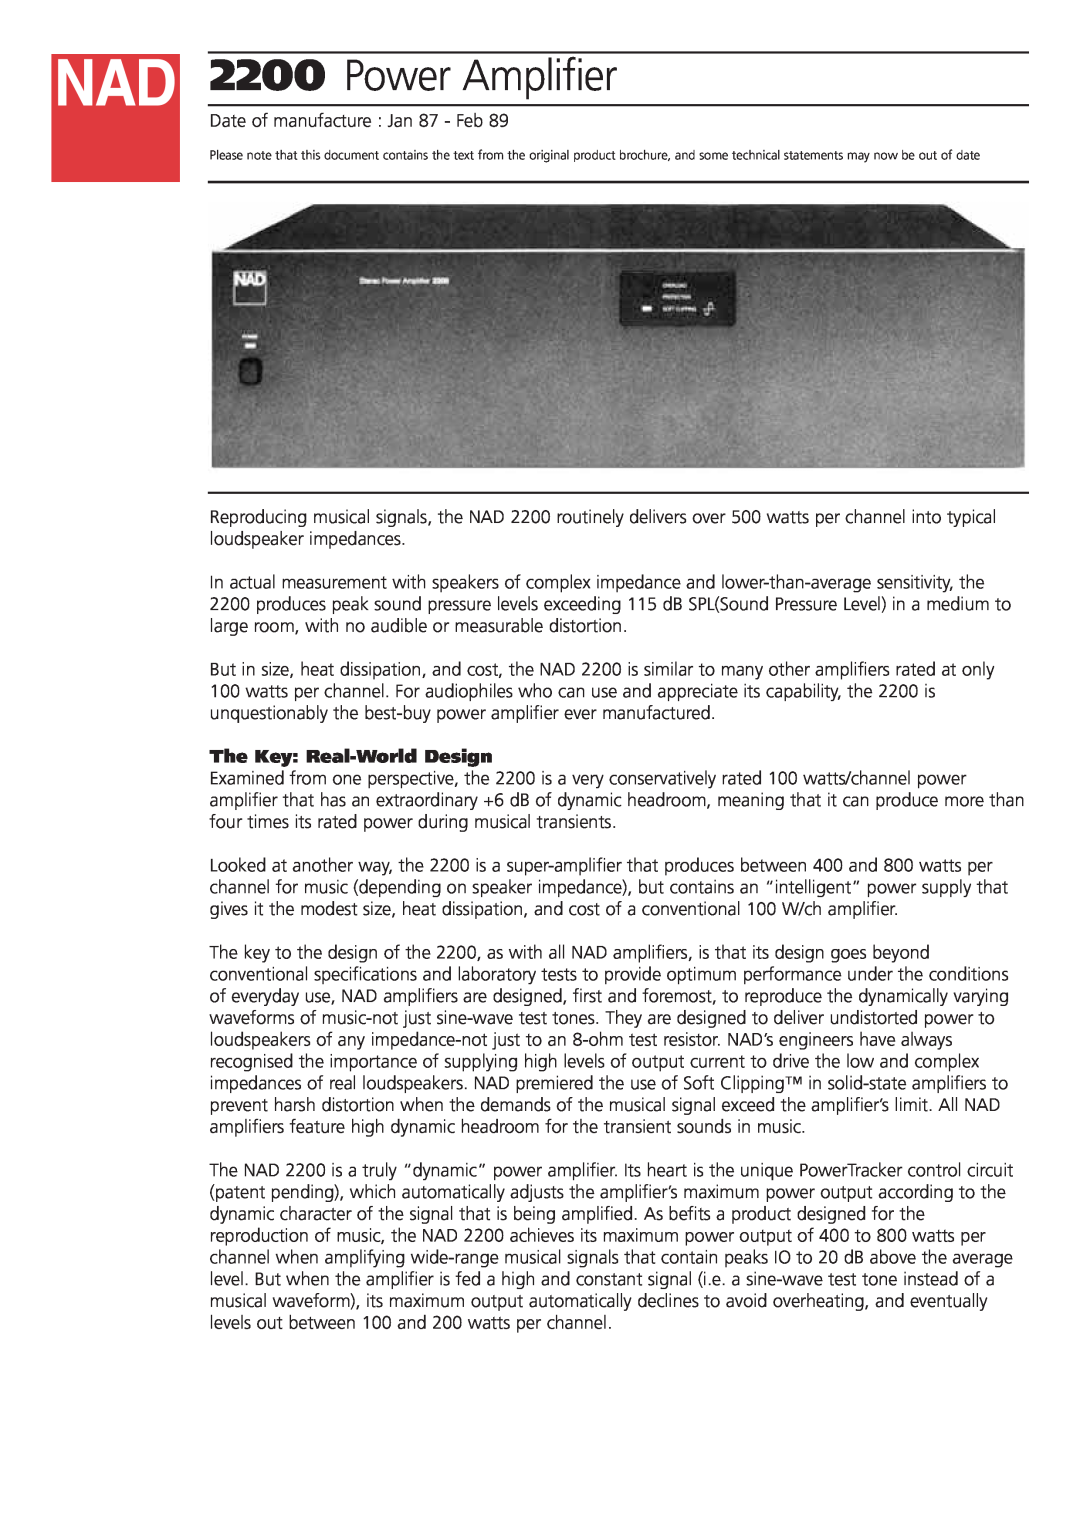 NAD 2200 brochure The Key Real-WorldDesign, Power Amplifier 